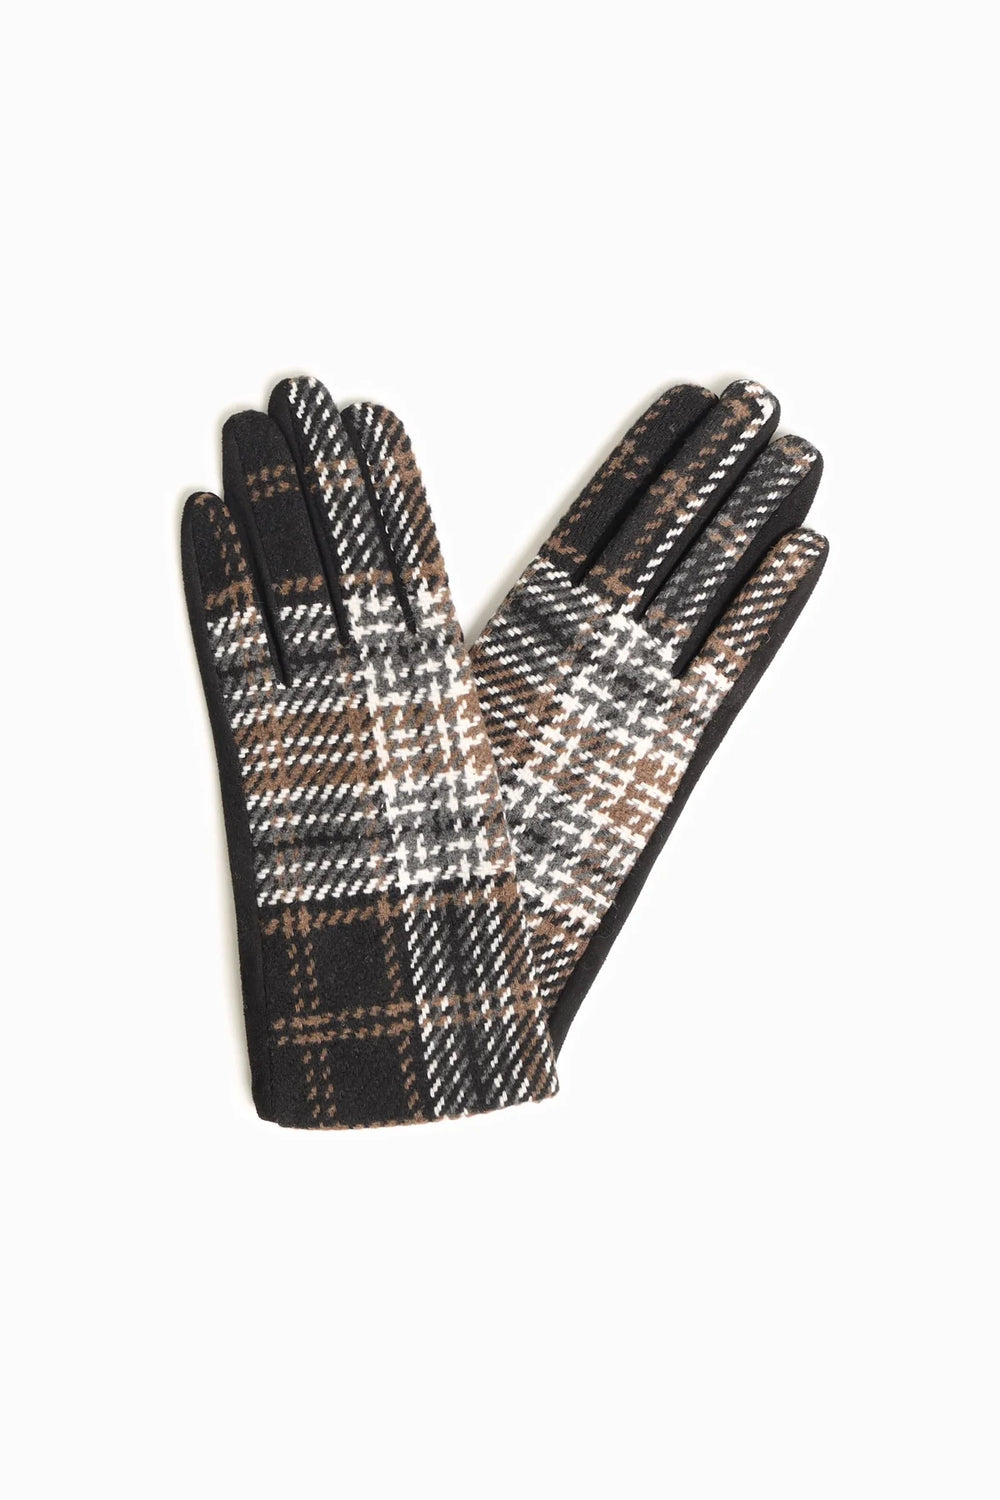 Vivienne Plaid Gloves in Black - Madison&